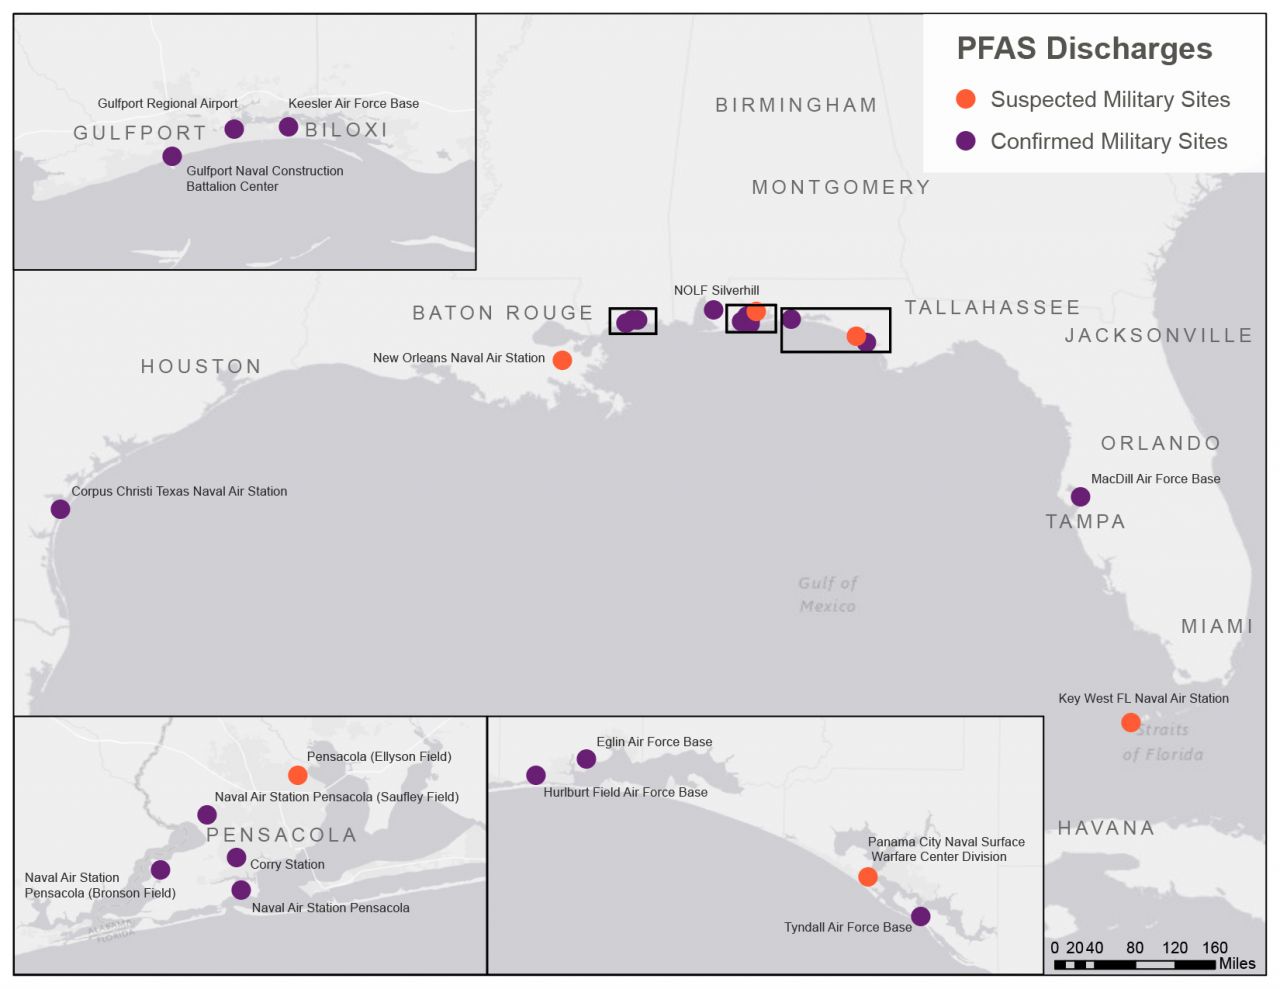 PFAS sites along the Gulf of Mexico